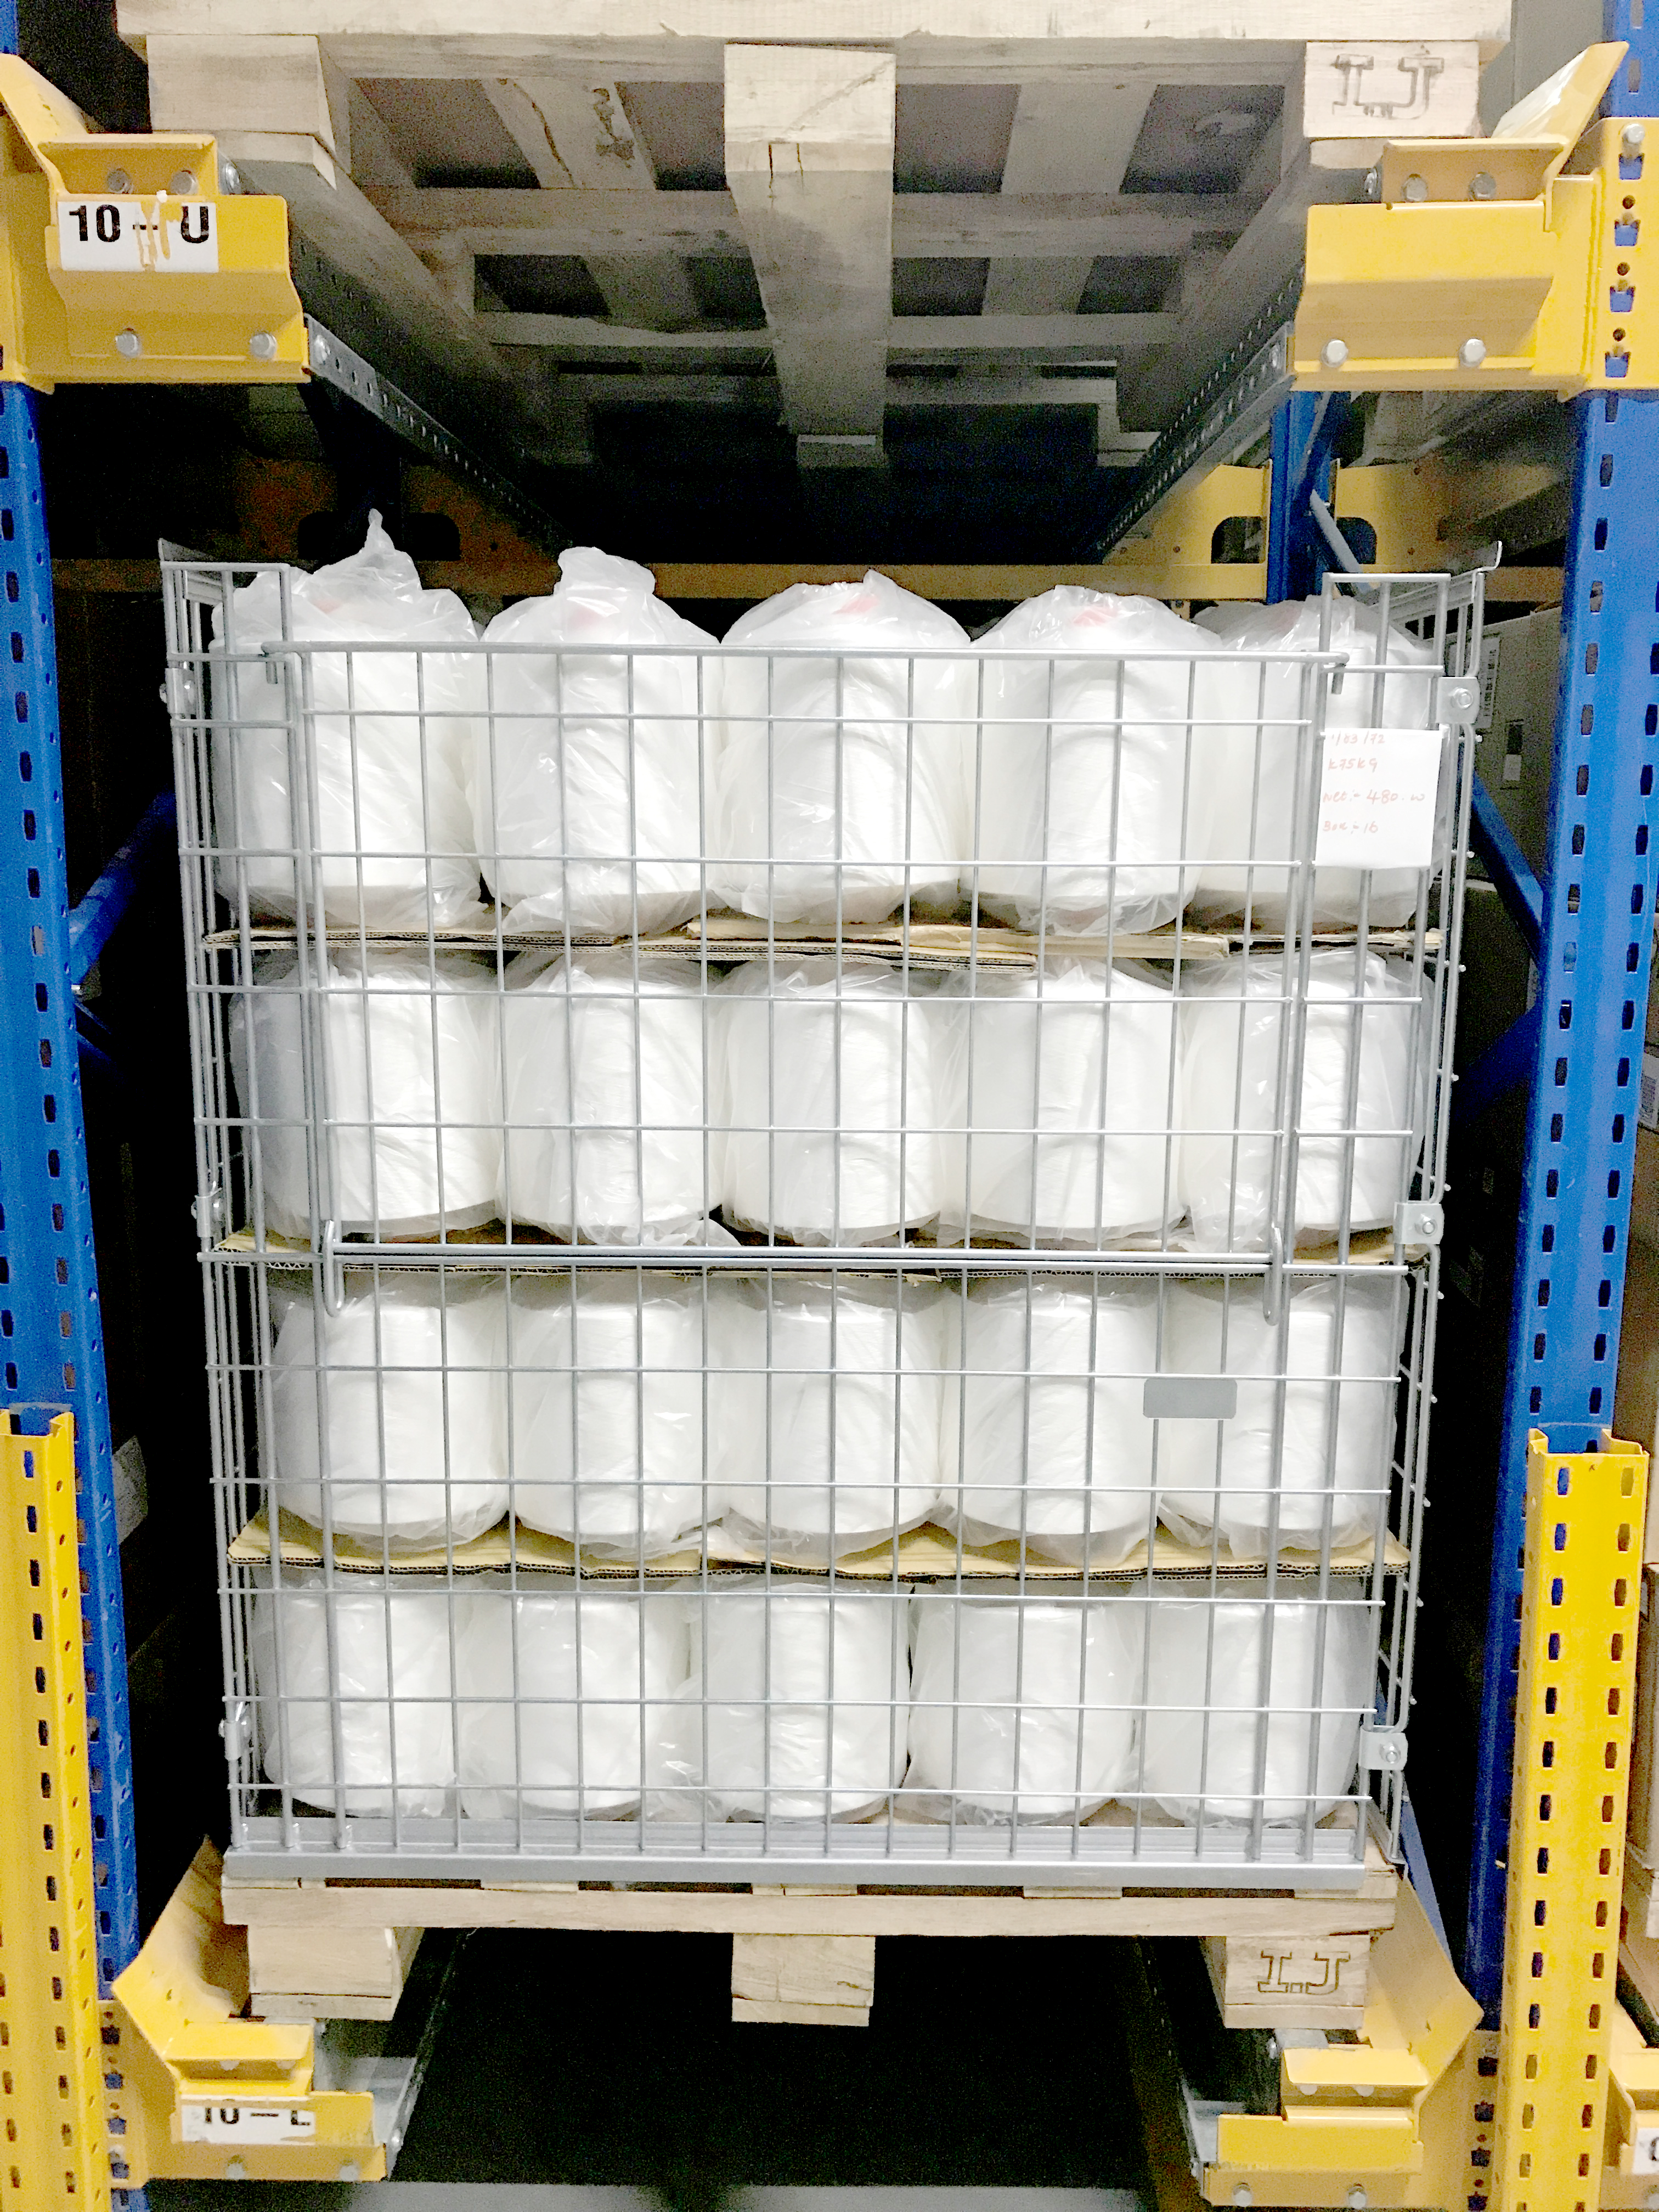 Cage Pallets for Better Logistics, Cage Pallets For Better Logistics and Warehouse Storage